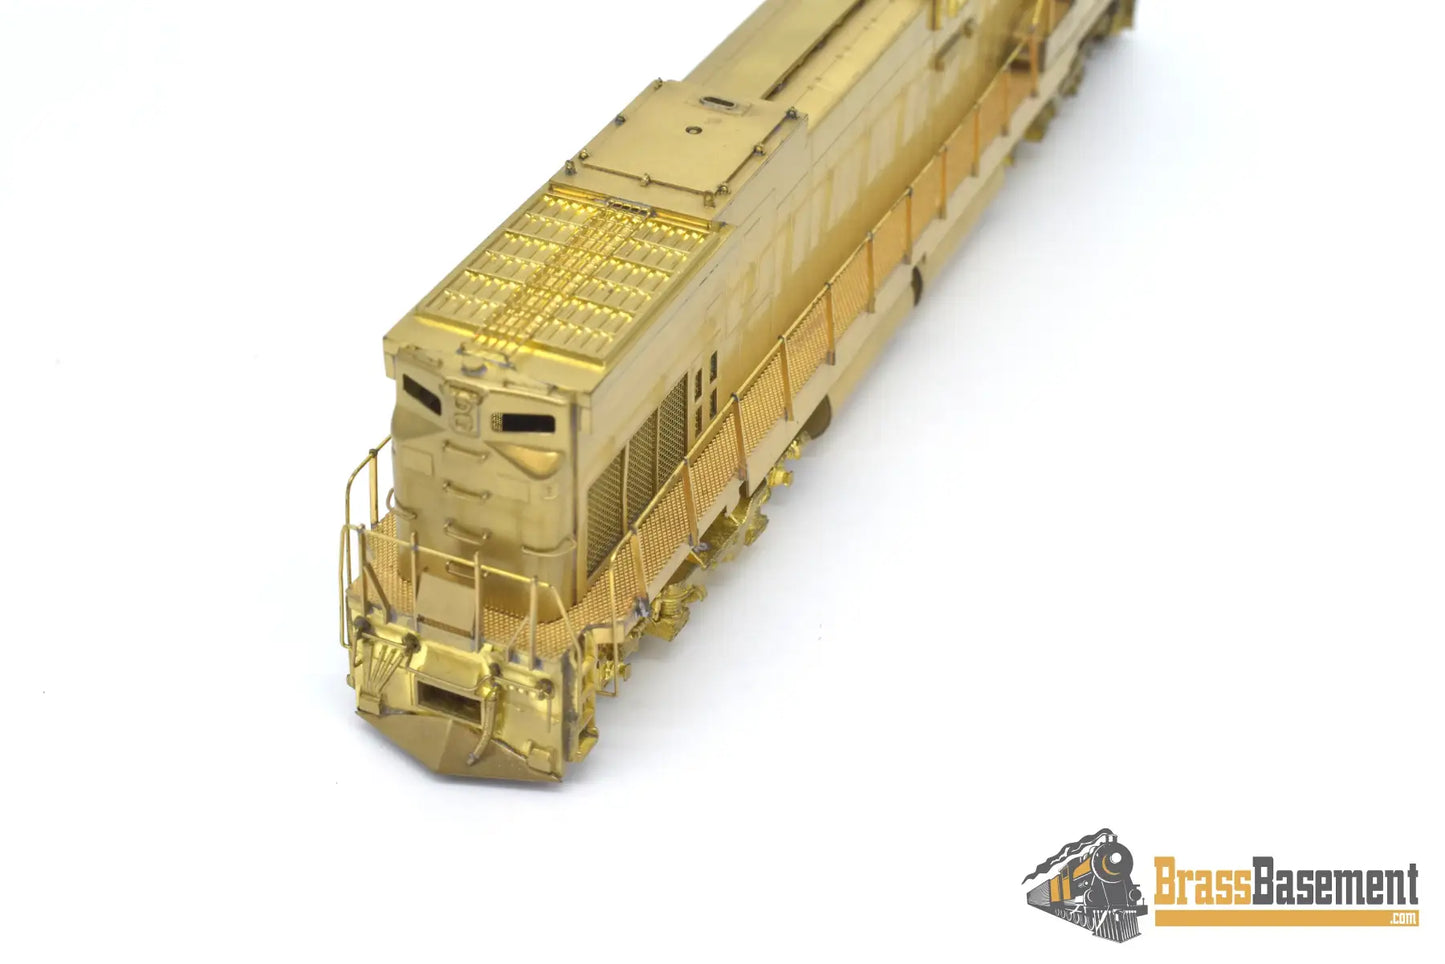 Ho Brass - Alco Imports #D - 141 C - 636 Locomotive Unpainted Kmt Diesel